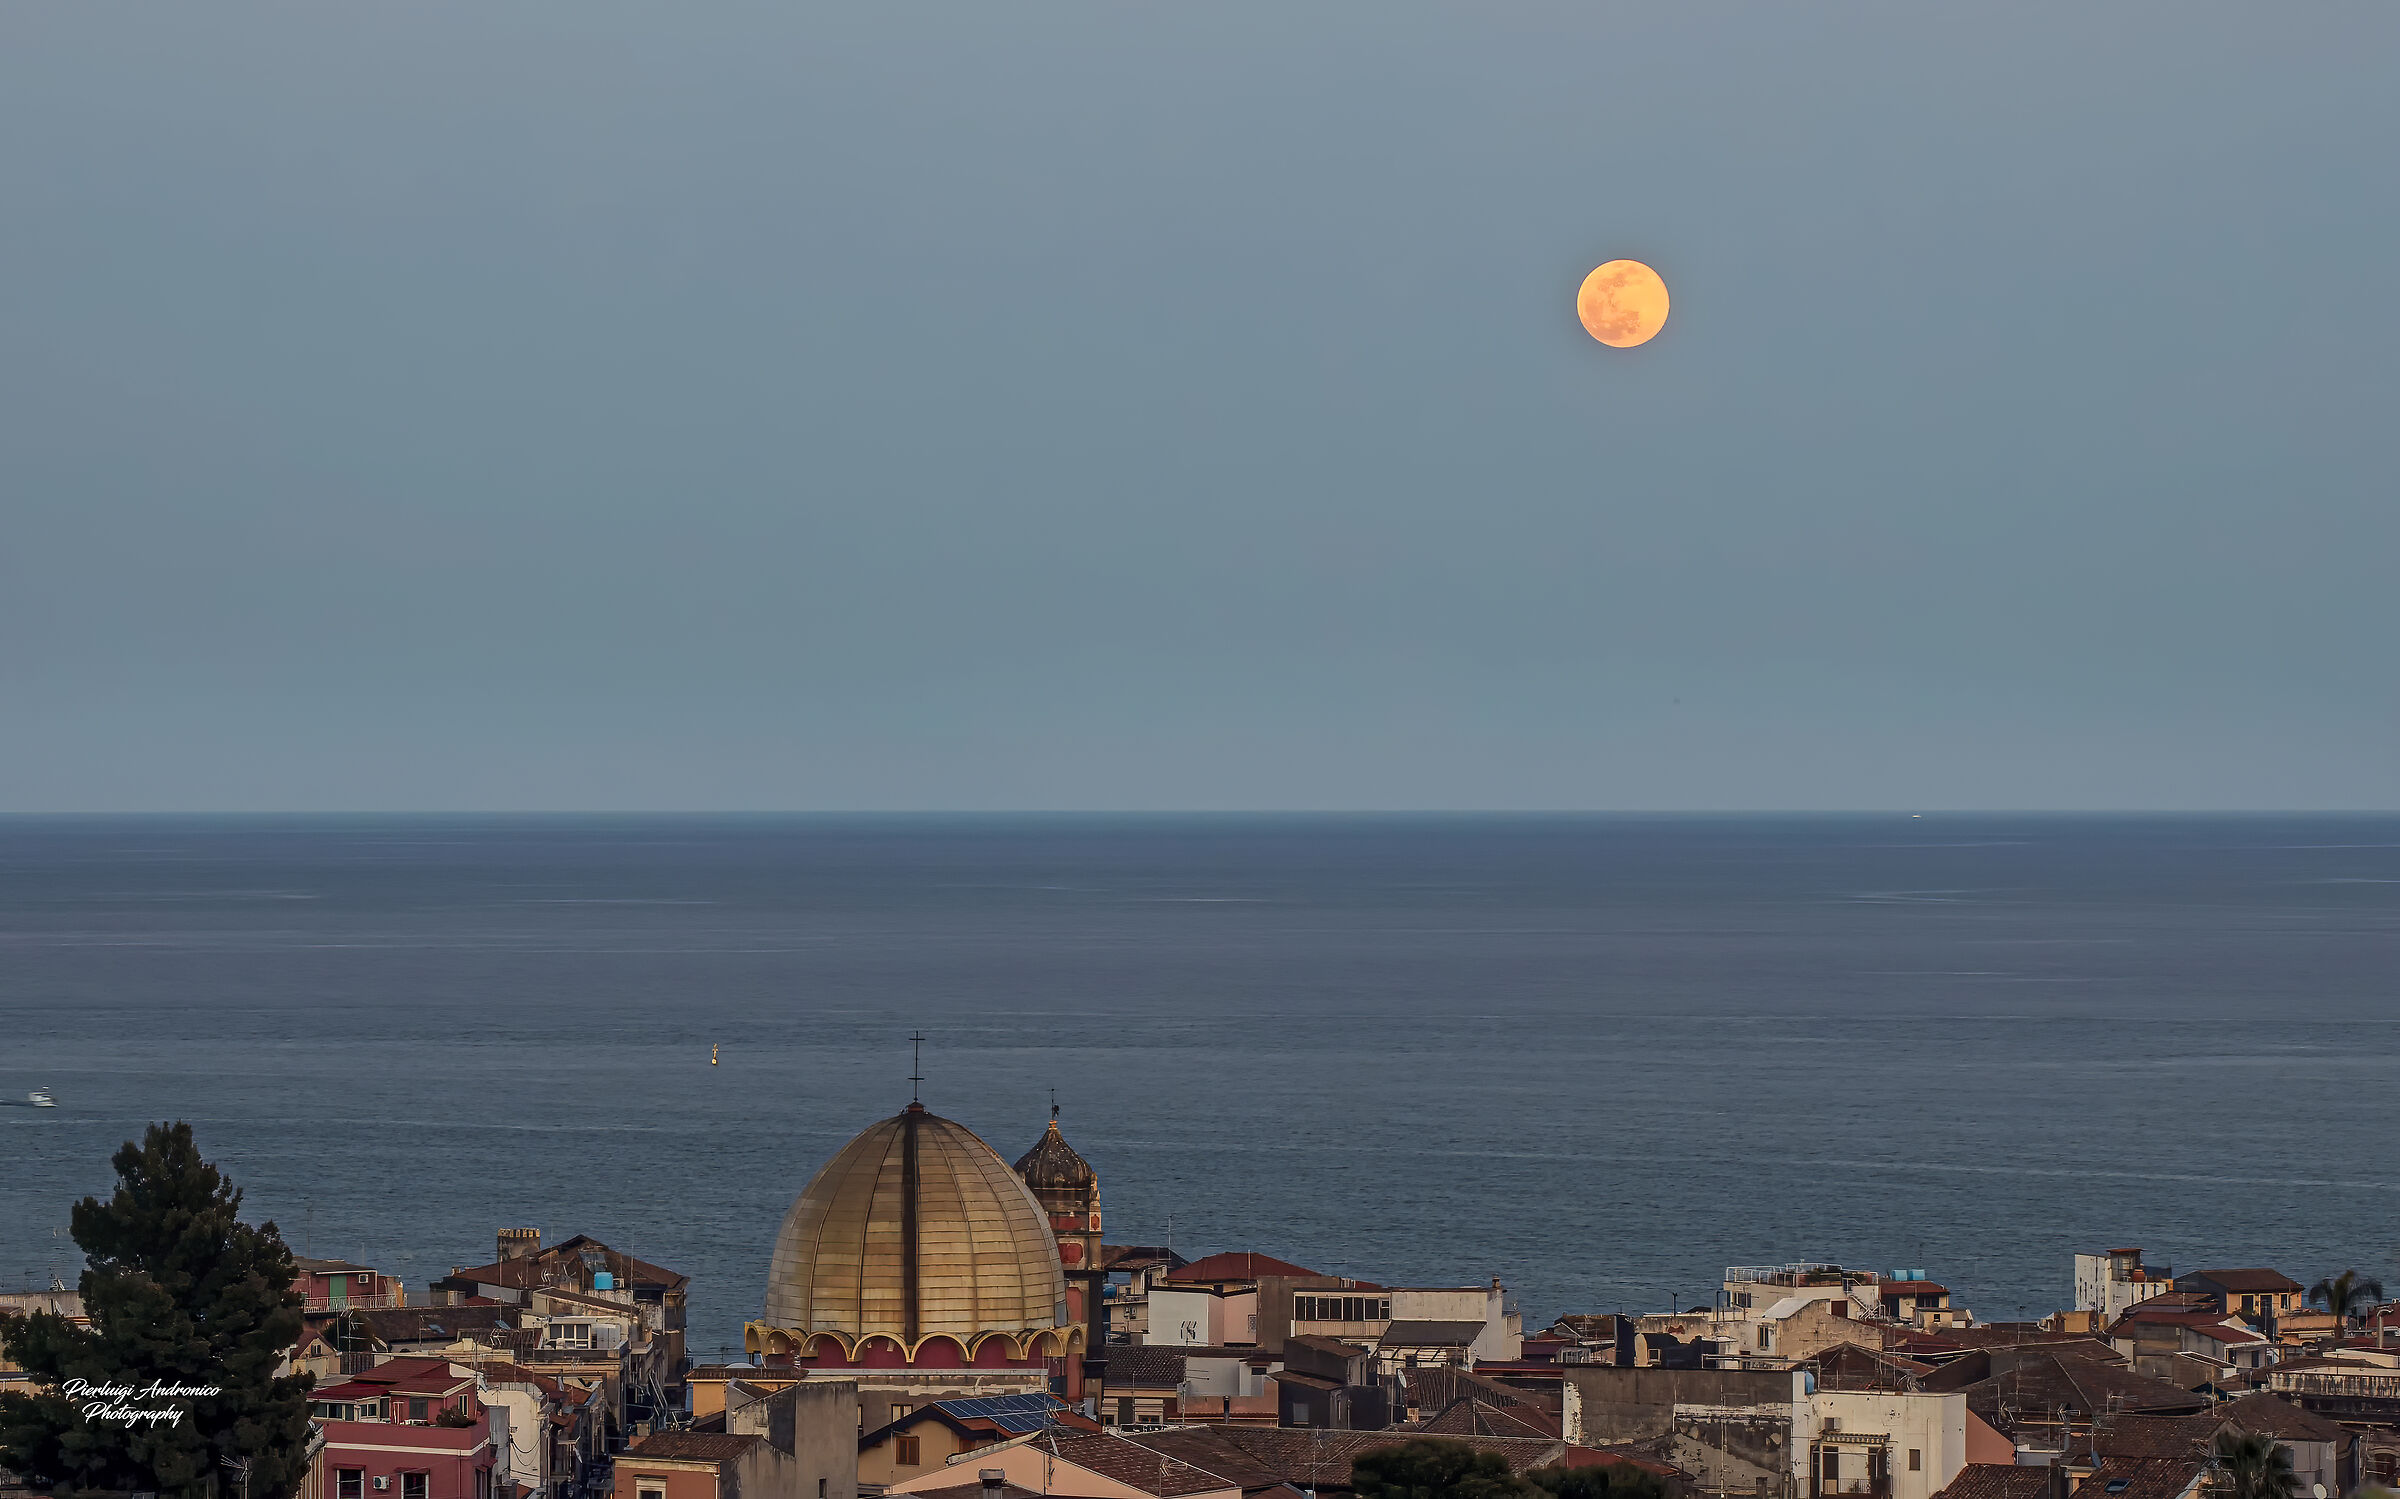 Lunar sunrise observed in the sky of Aci Castello...